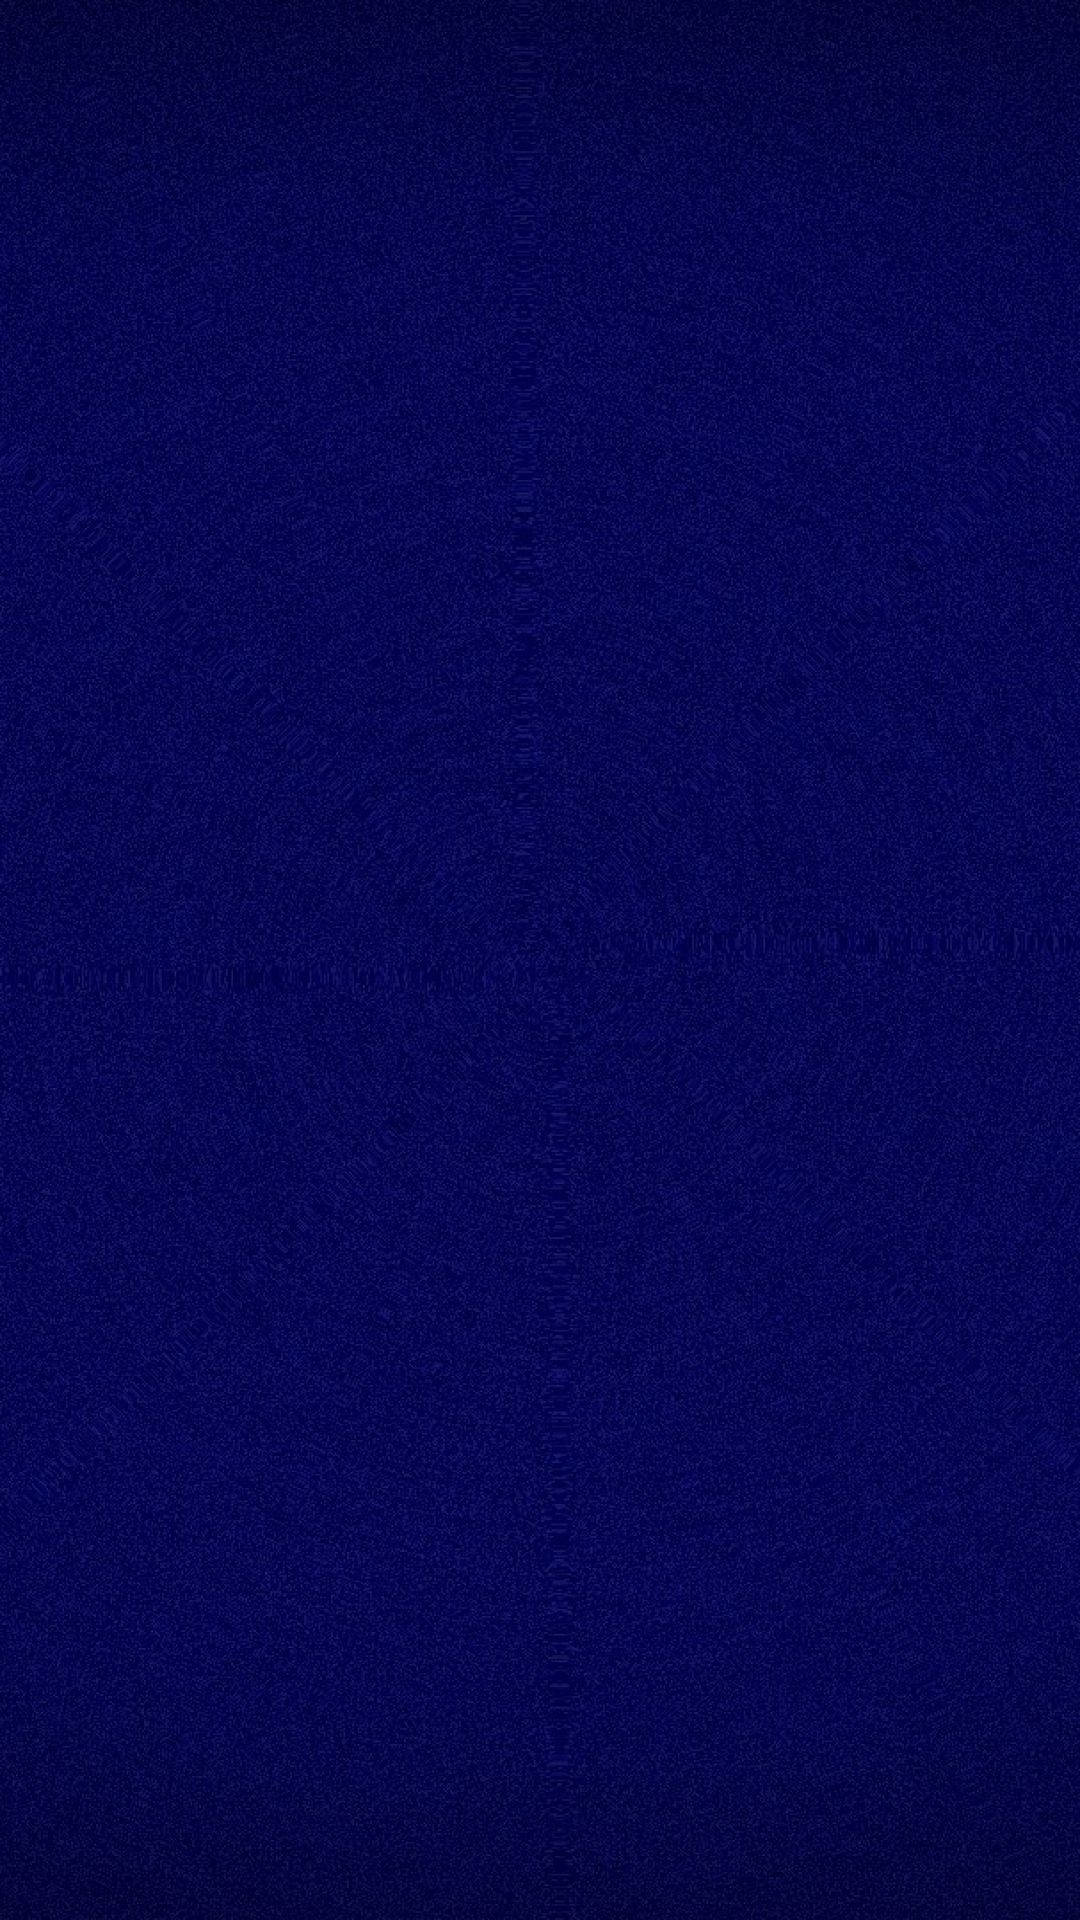 Download Dark Blue Plain Wallpaper 